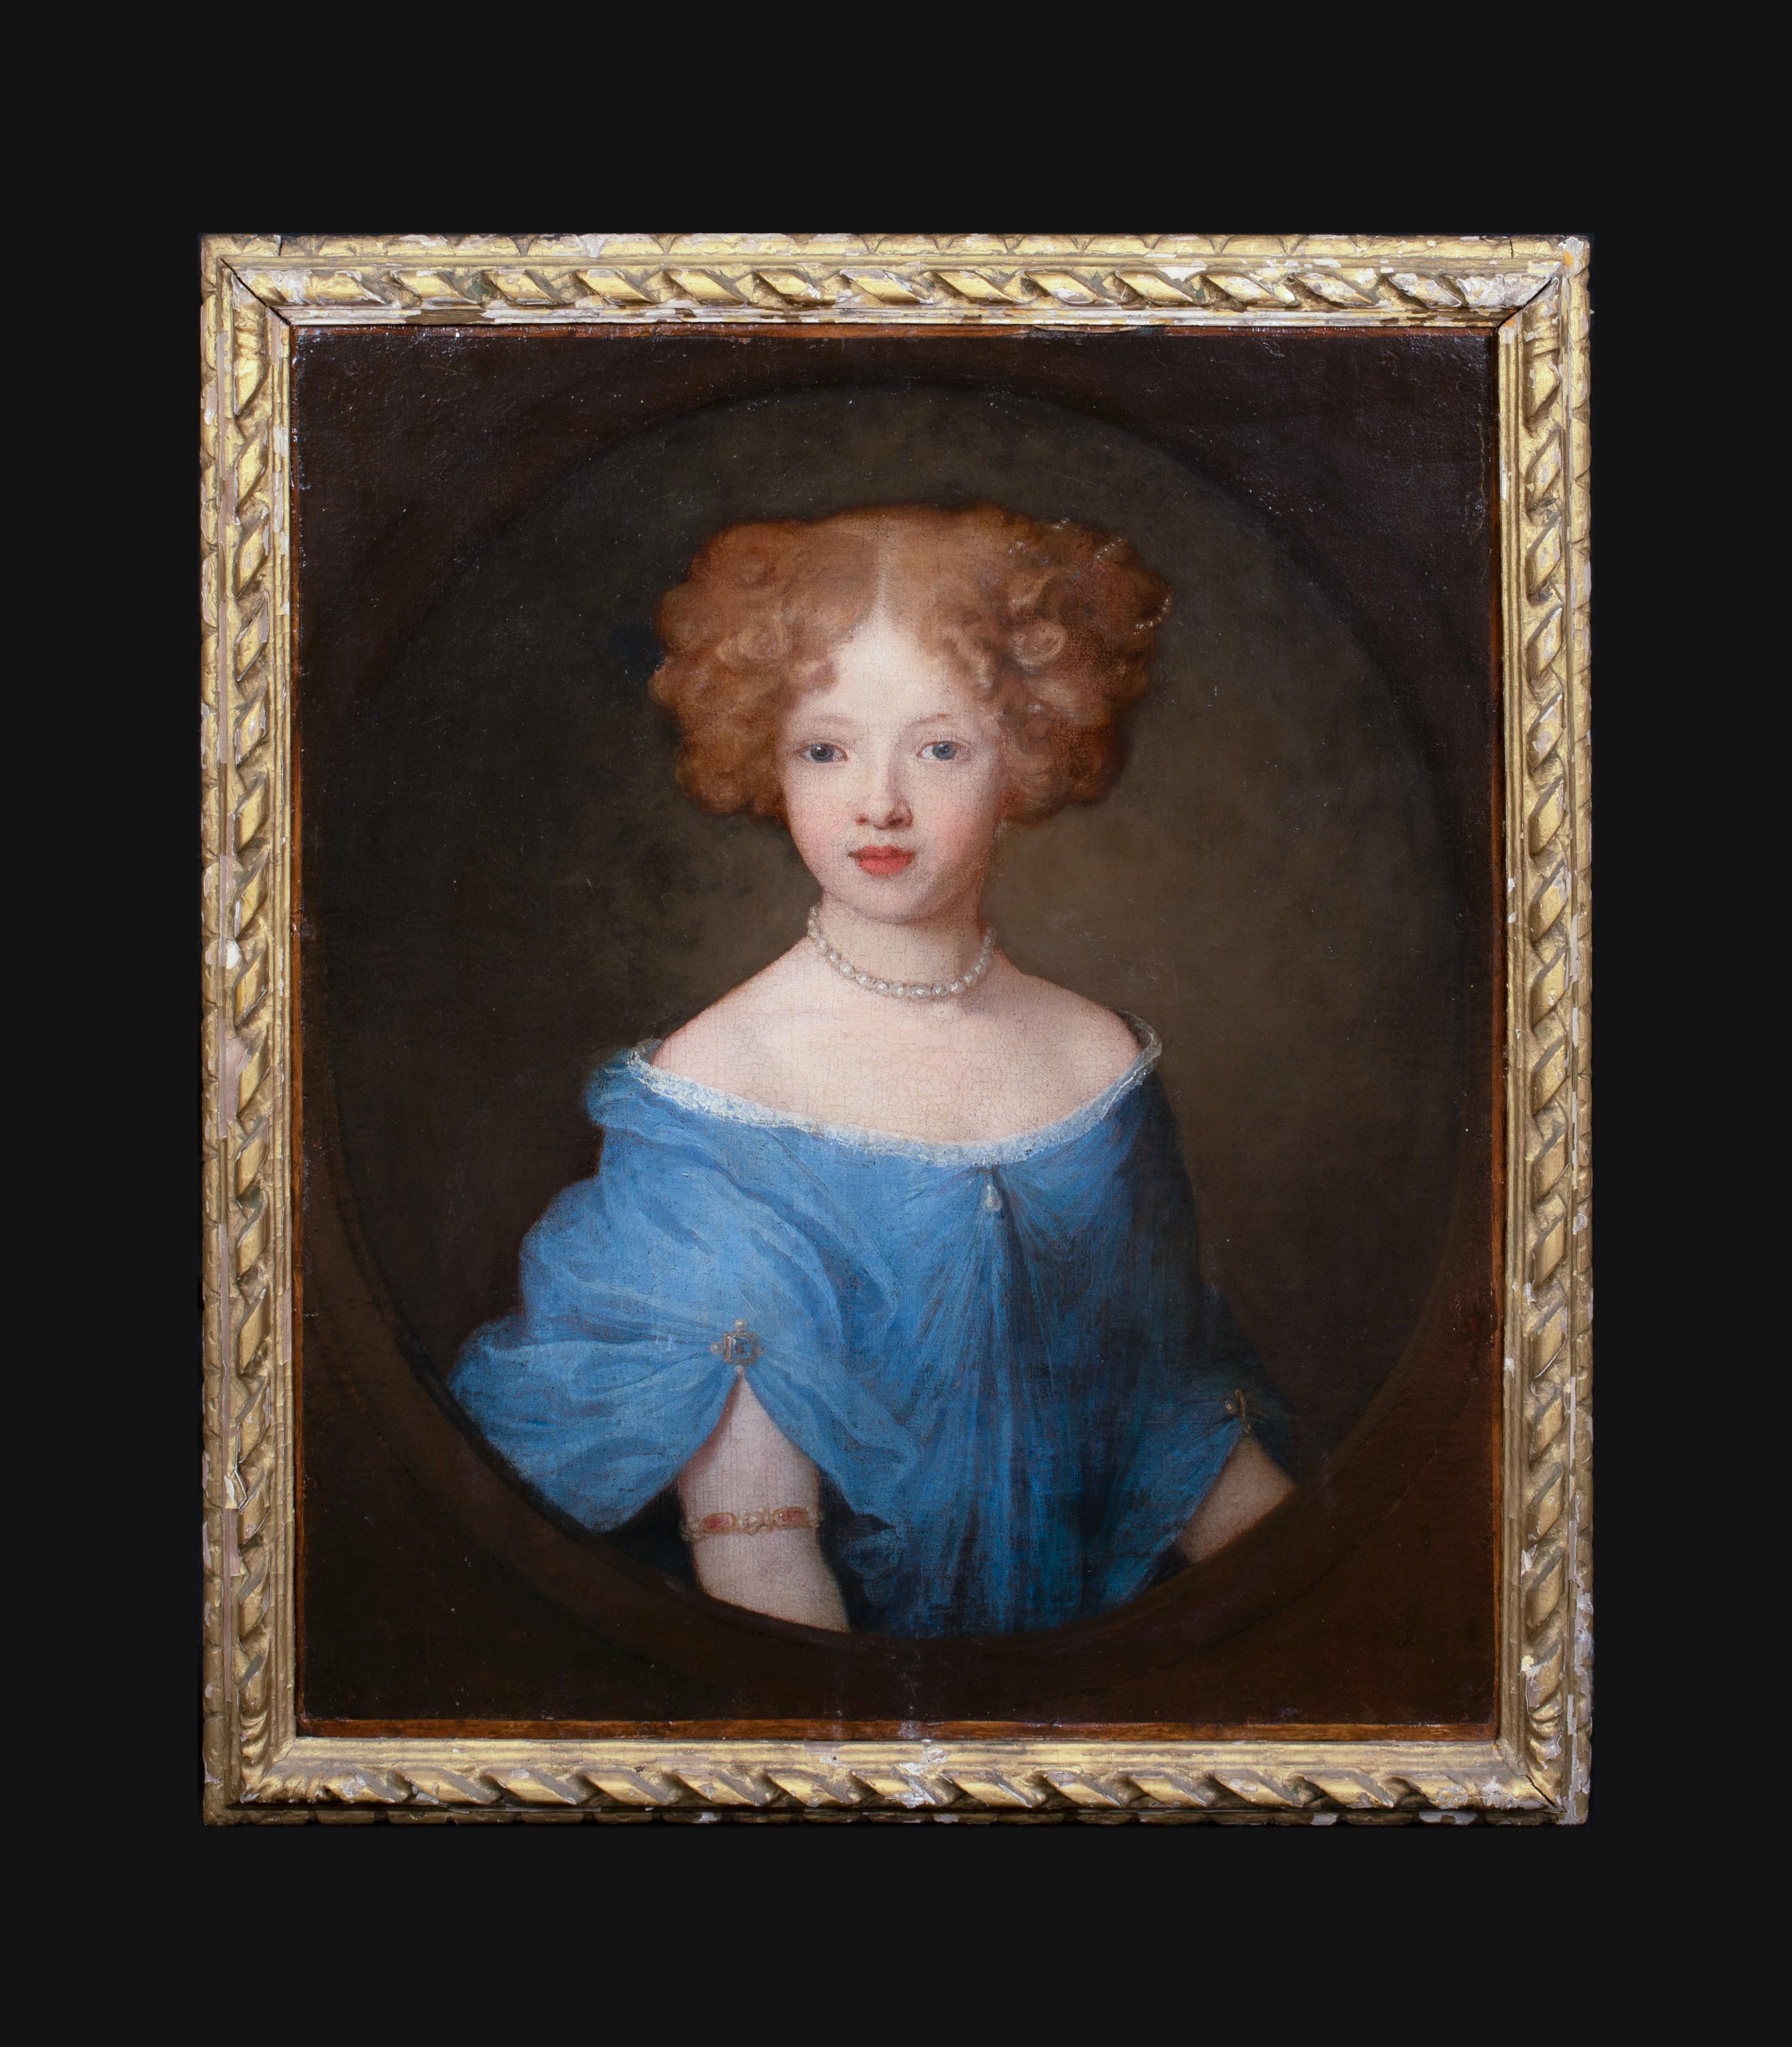 17th century girl